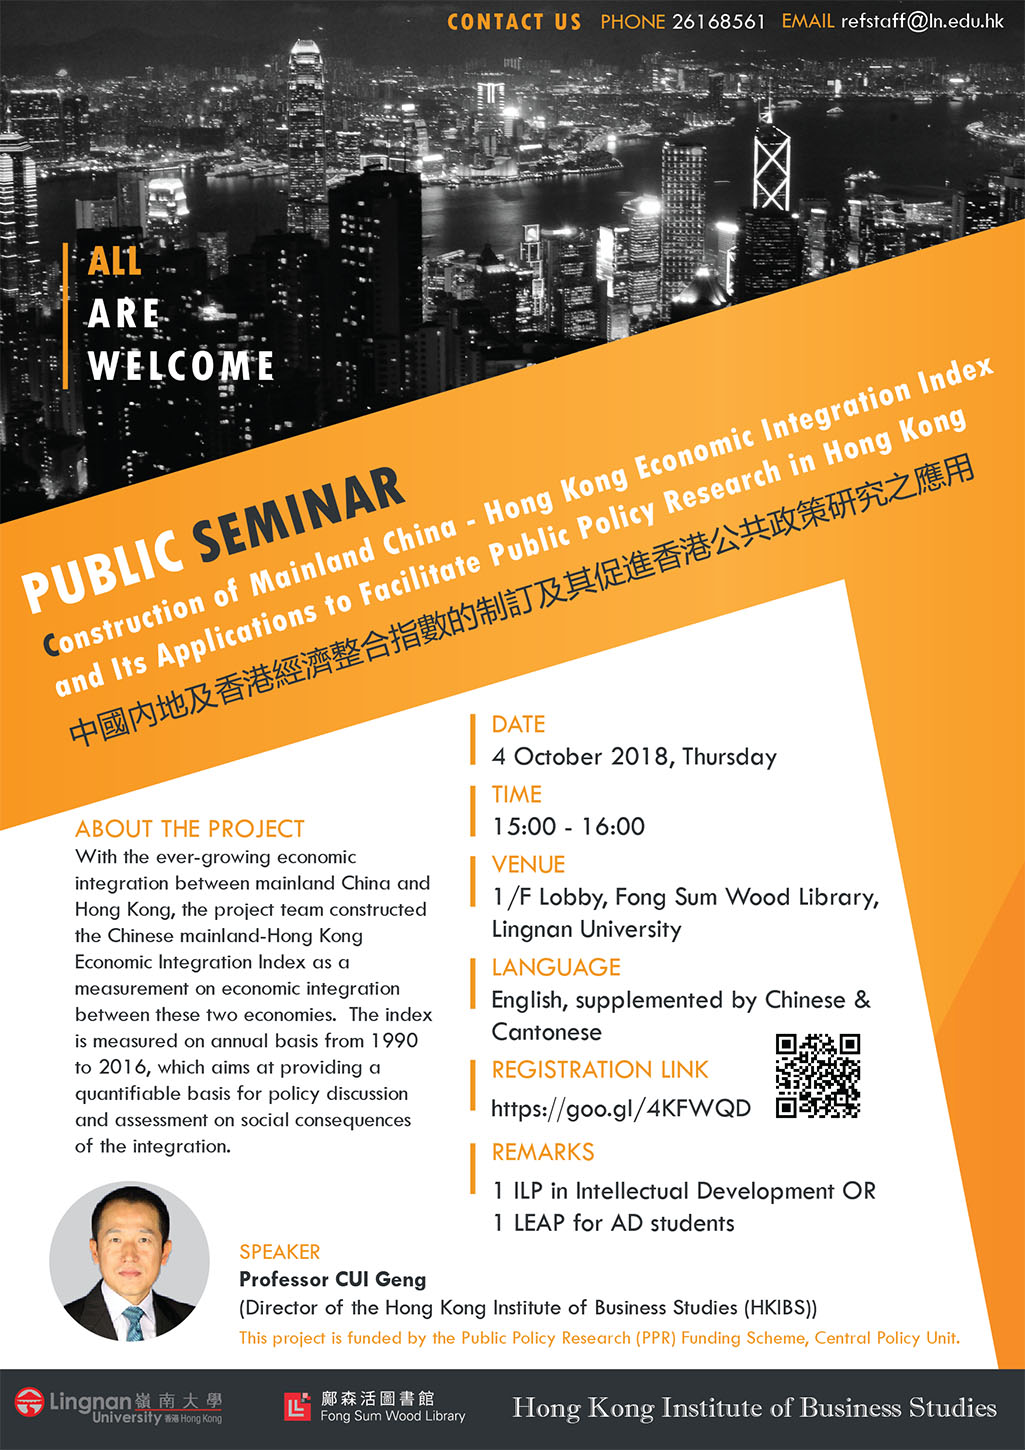 Public seminar — “Construction of Mainland China- Hong Kong Economic Integration Index and Its Applications to Facilitate Public Policy Research in Hong Kong”